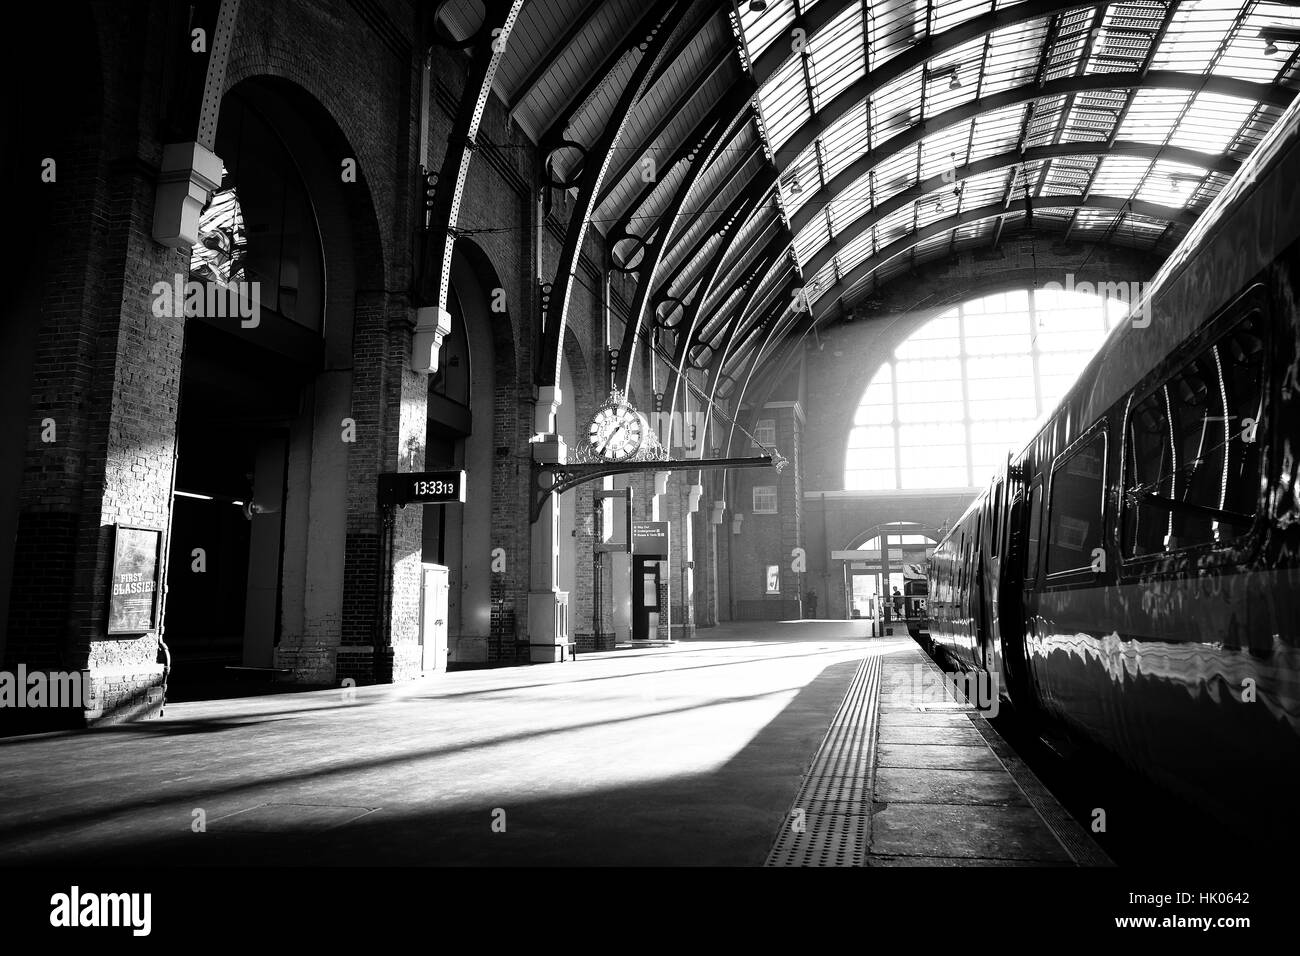 A shaft of light shines down upon a railway station platform Stock Photo